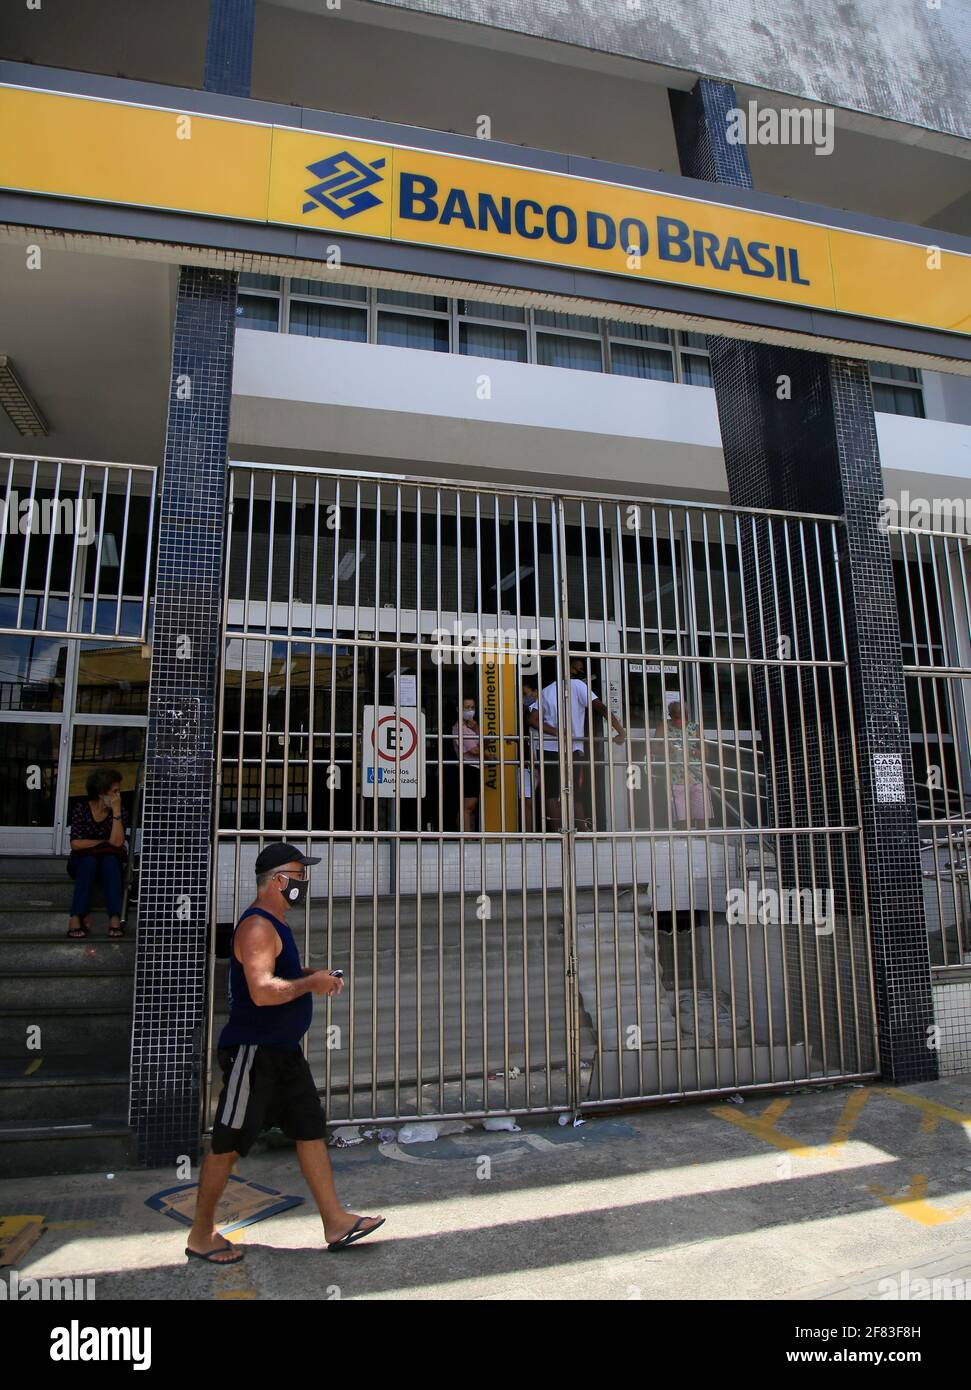 salvador, bahia, brazil - january 27, 2021: facade of the Banco do Brasil  branch in the Liberdade neighborhood, in the city of Salvador. *** Local Ca  Stock Photo - Alamy